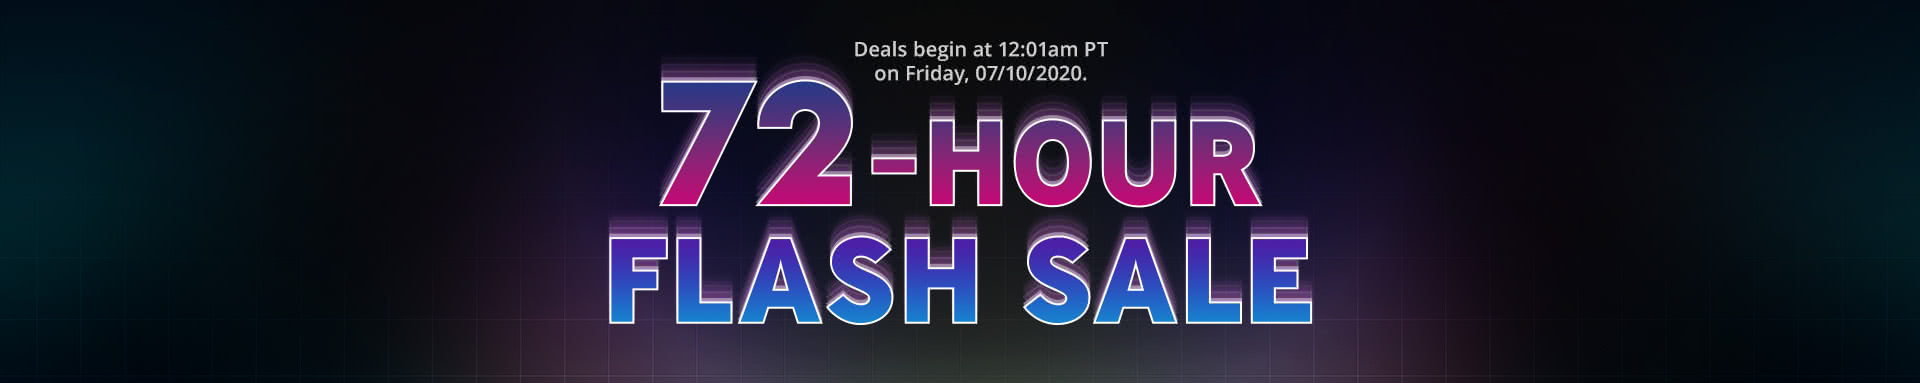 72-Hour Flash Sale